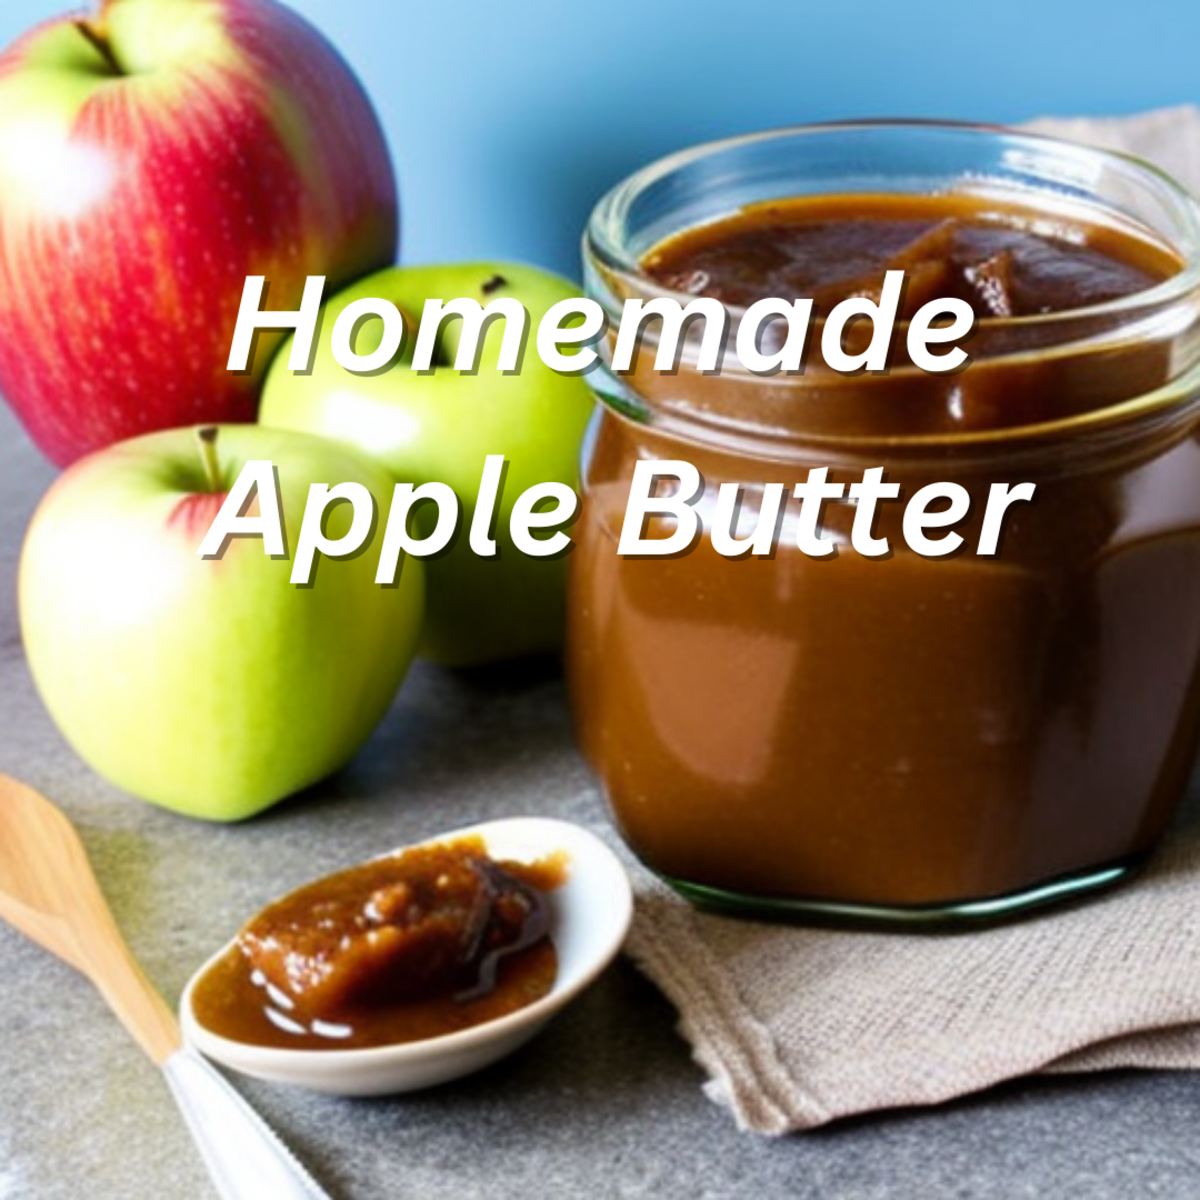 Homemade Apple Butter Recipe